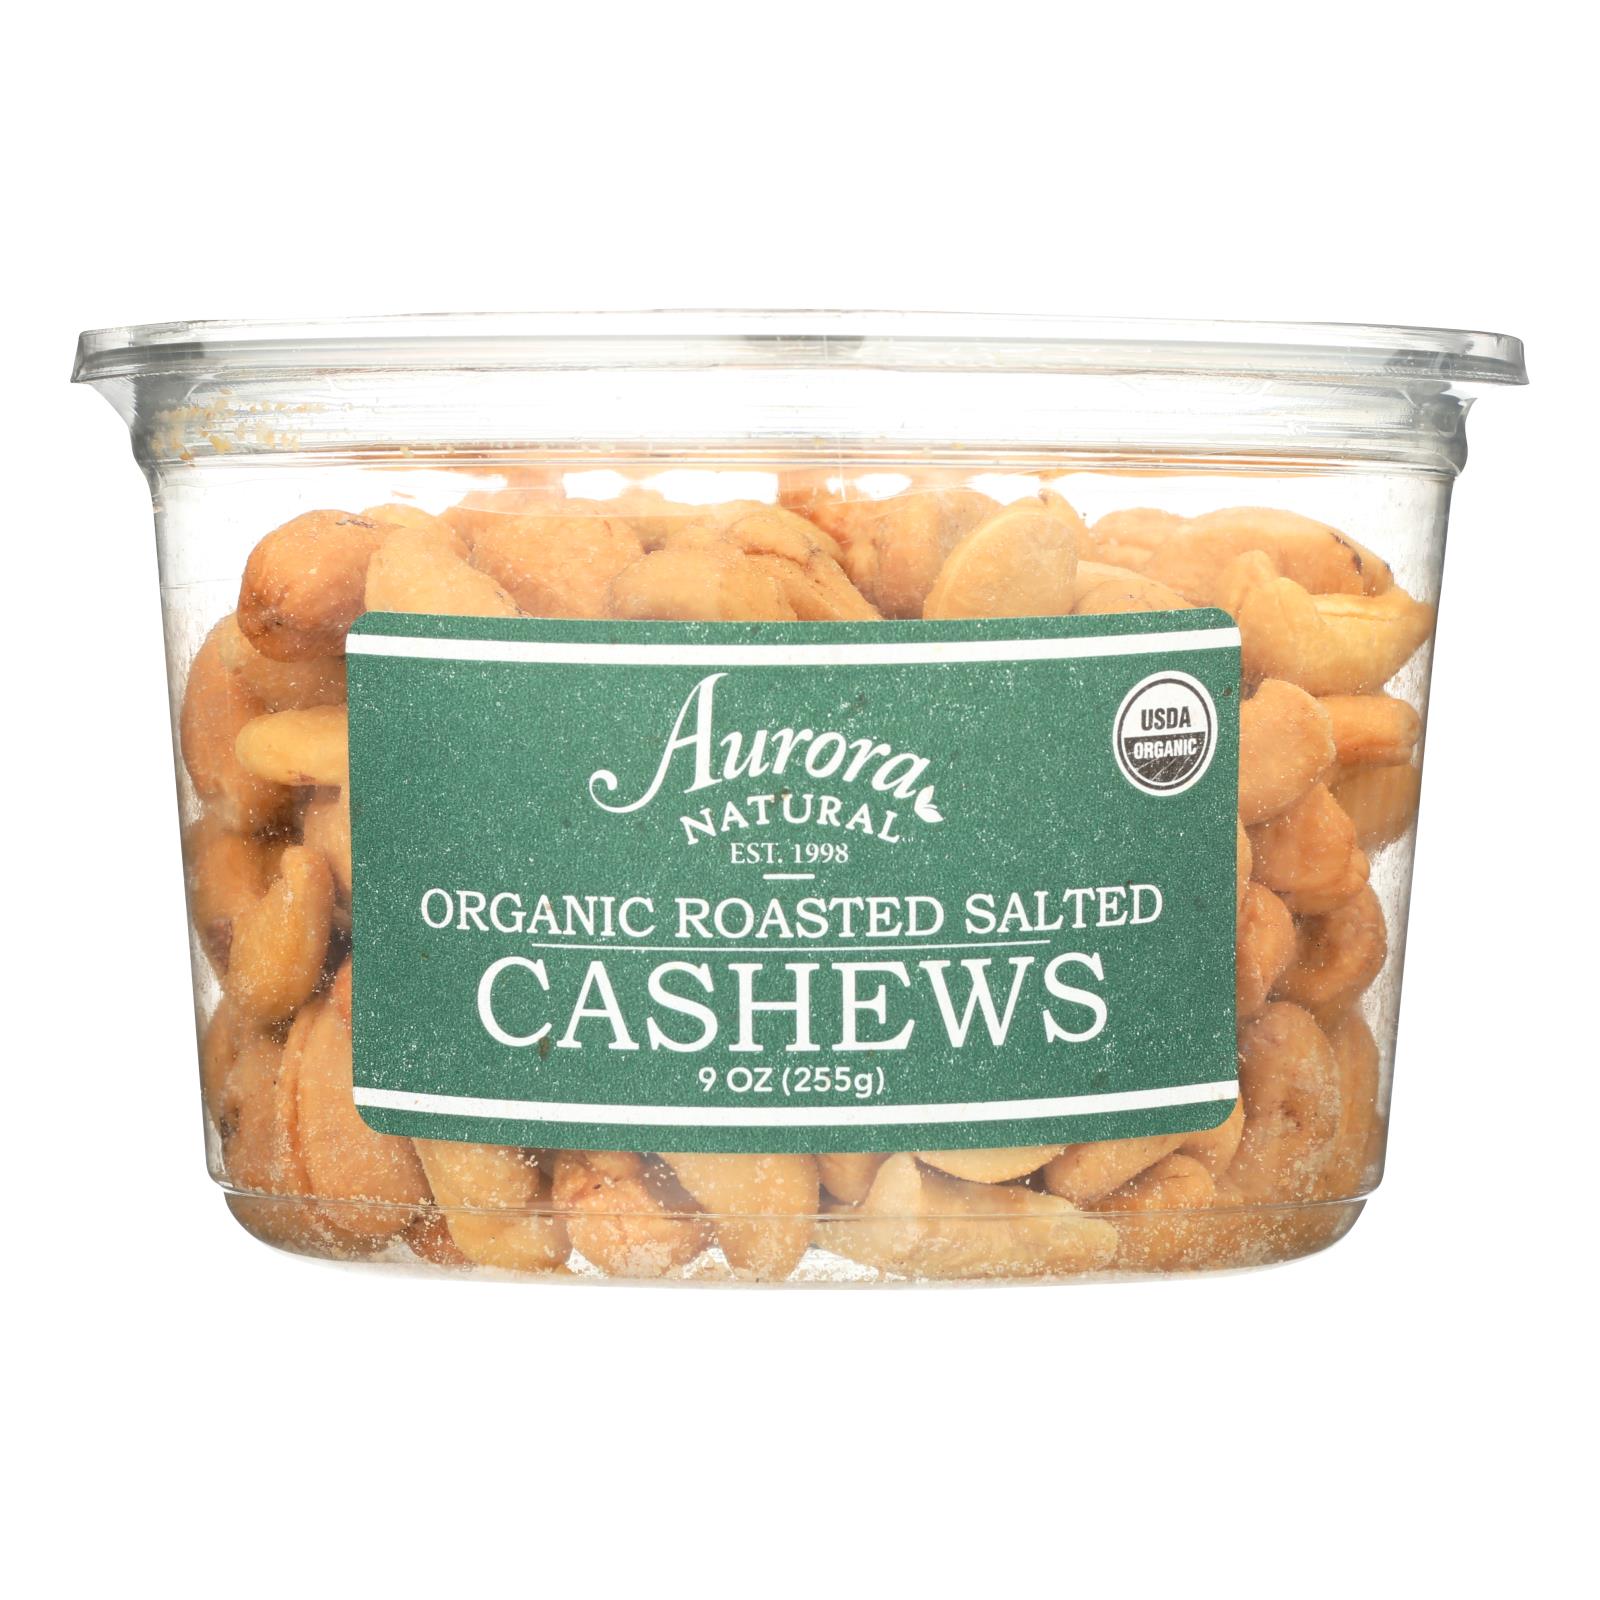 Aurora Natural Products - Organic Roasted Salted Cashews - 12개 묶음상품 - 9 oz.